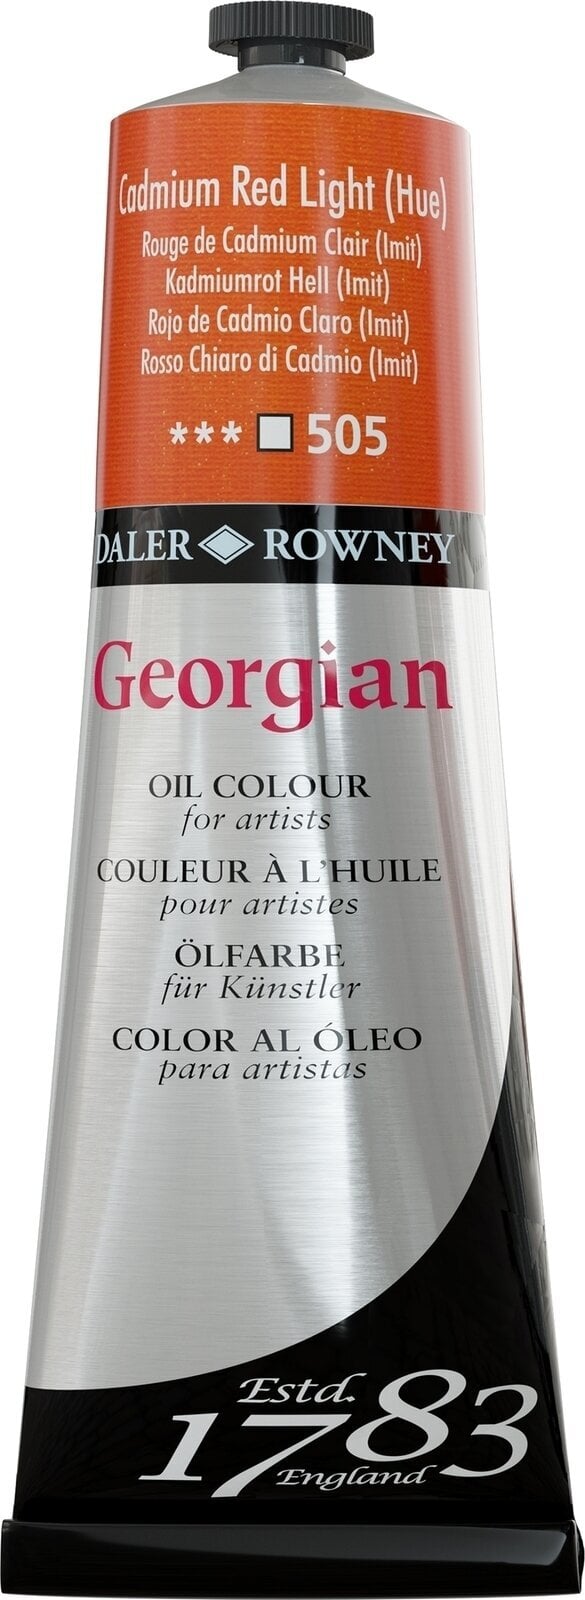 Oil colour Daler Rowney Georgian Oil Paint Cadmium Red Light Hue 225 ml 1 pc